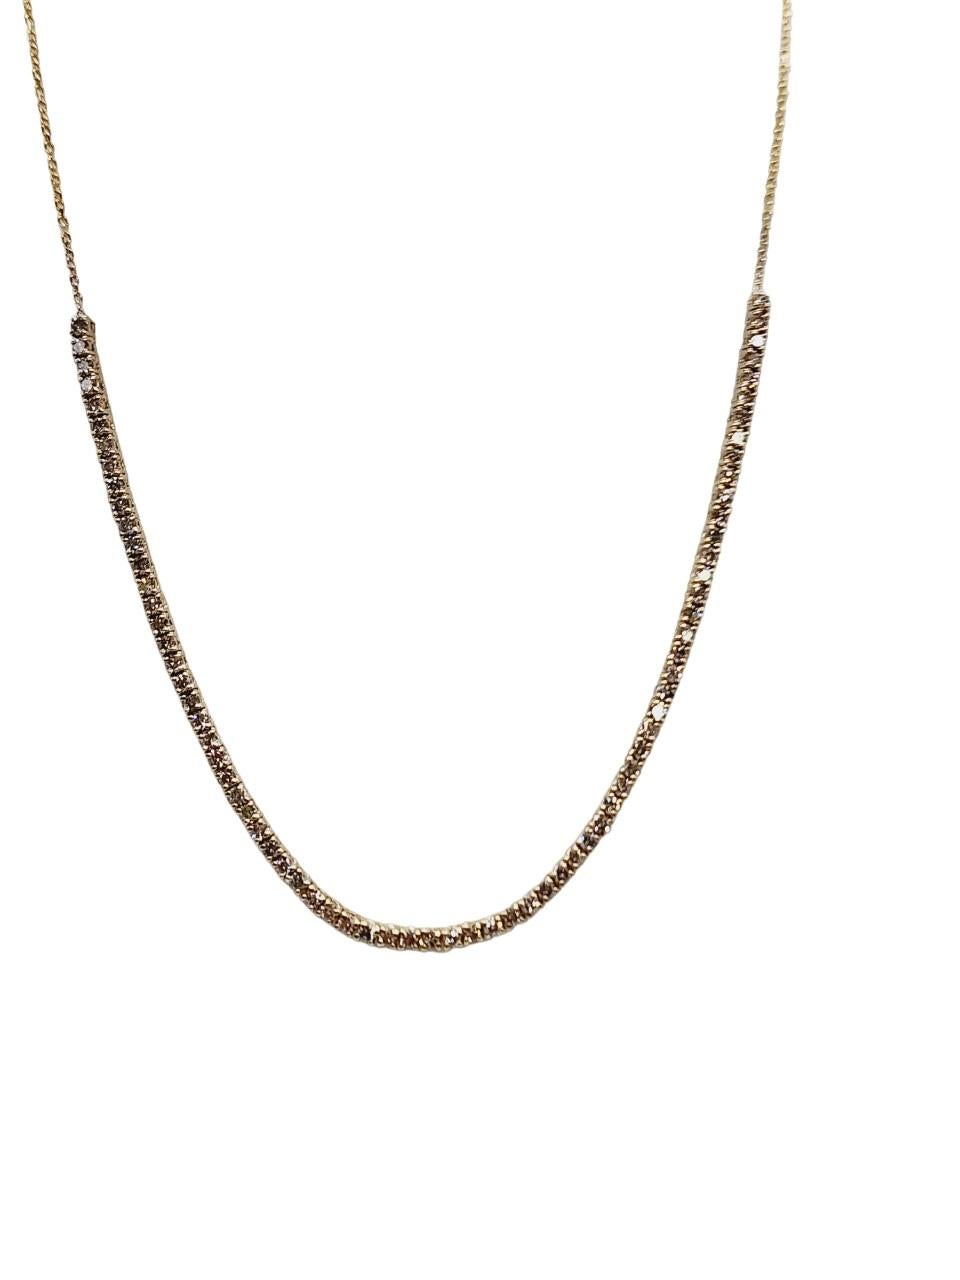 Round Cut 1.65 Carat Mini Diamond Necklace Chain 14 Karat Yellow Gold 20'' For Sale